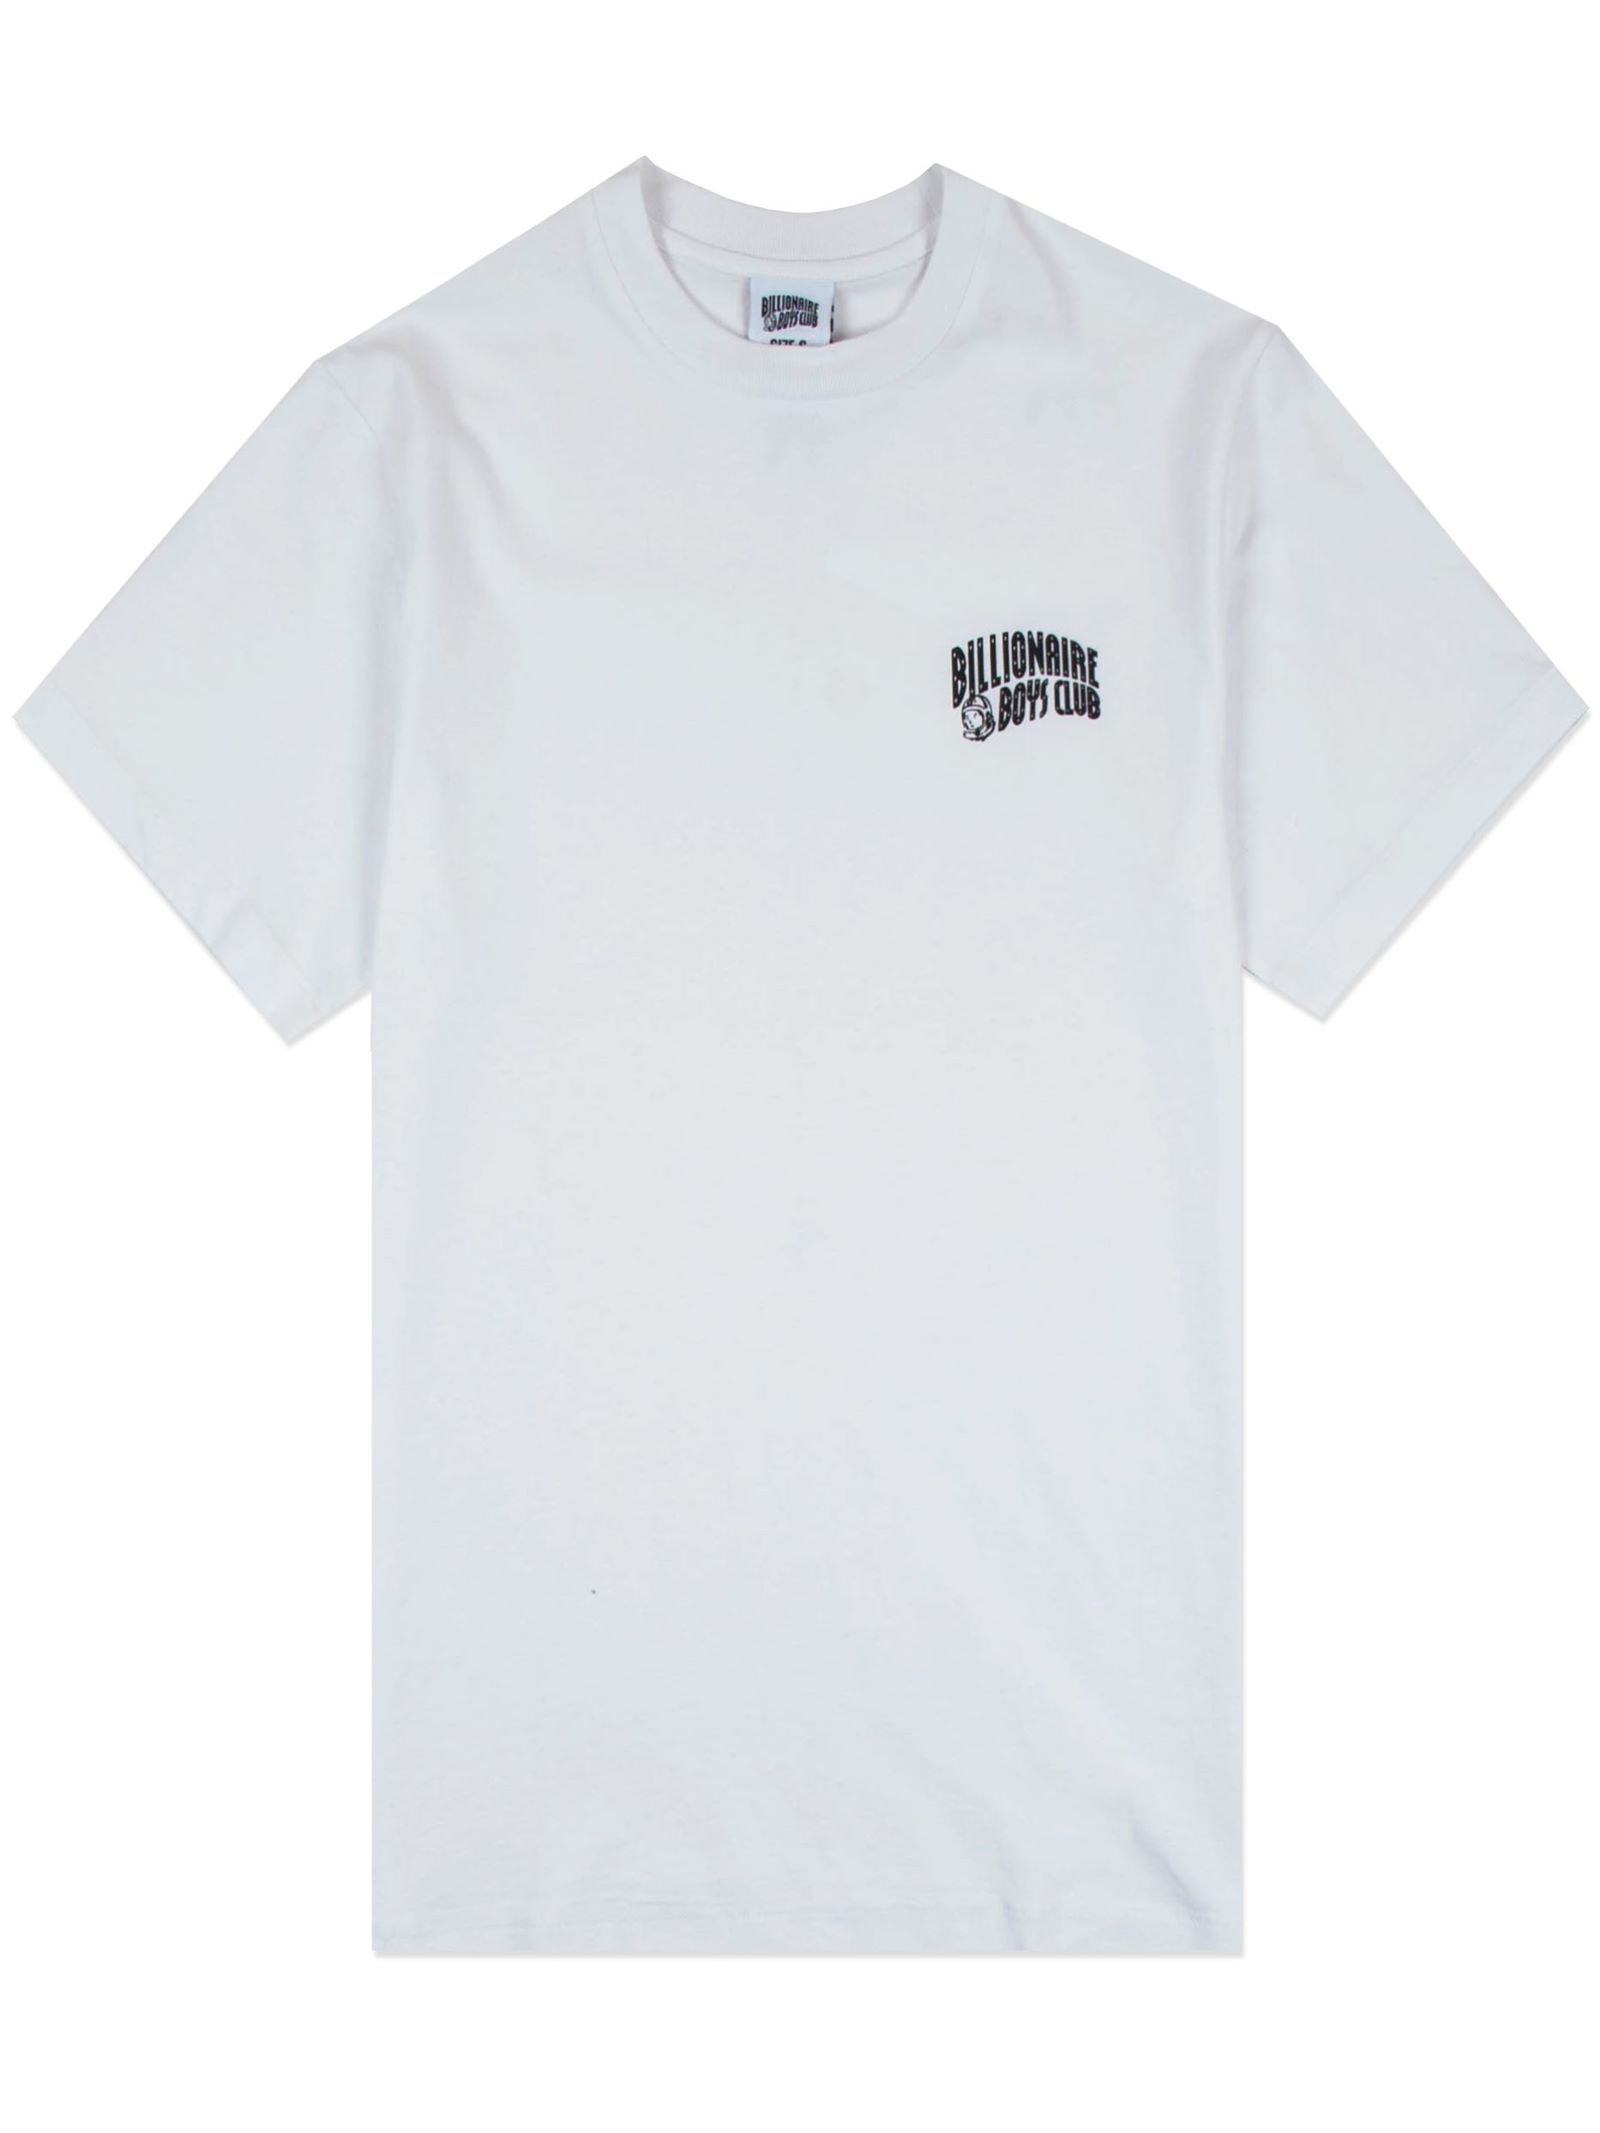 Billionaire Boys Club Small Arch Logo T-Shirt in White | Dapper Street